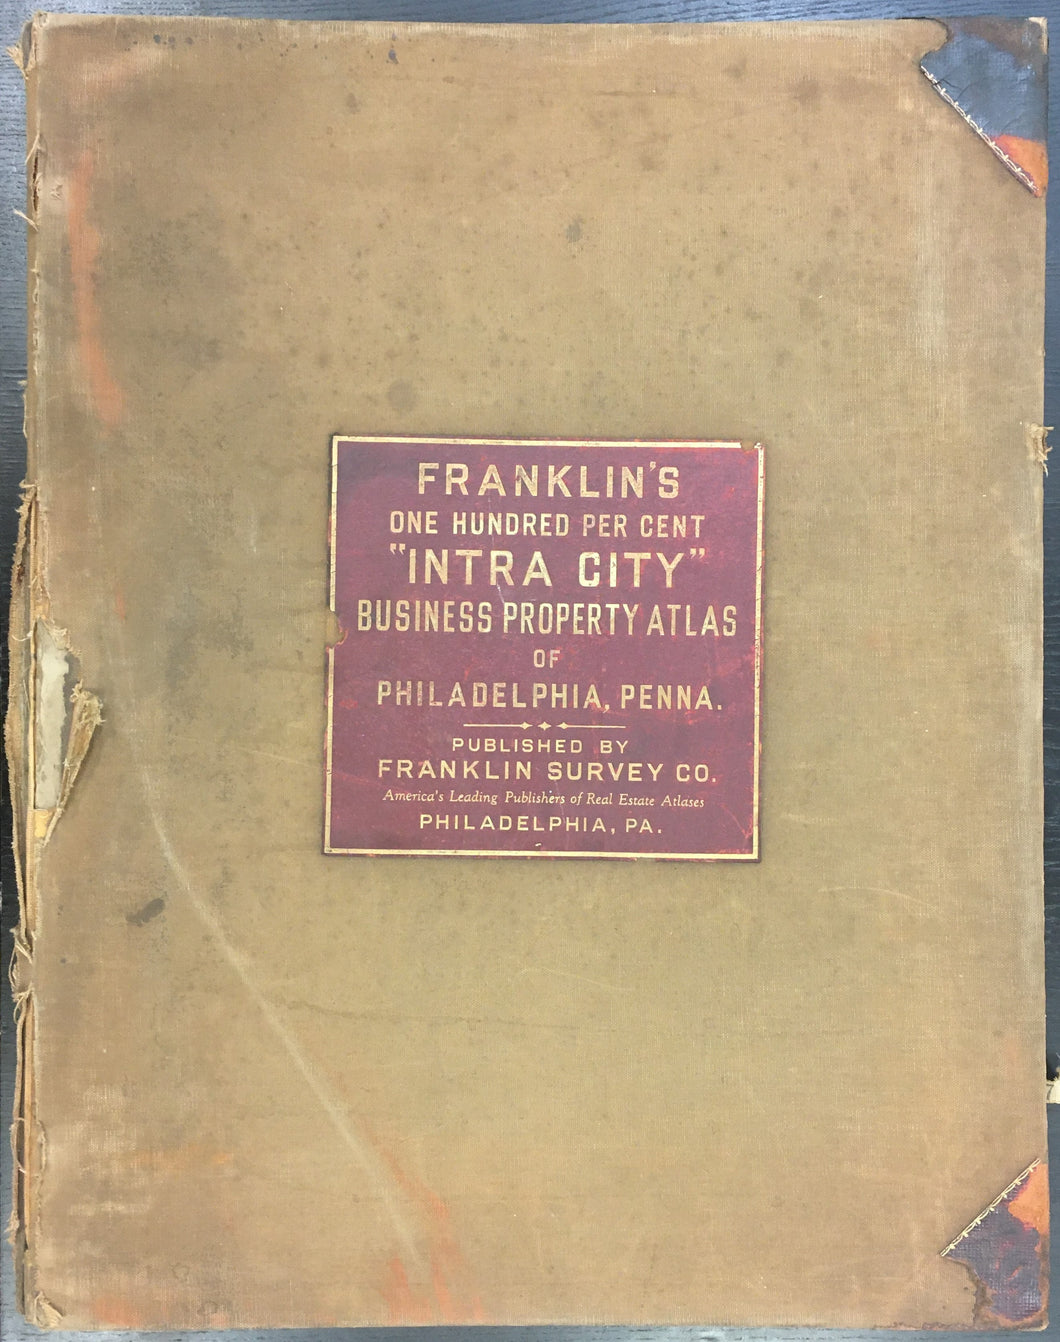 Franklin Survey Co.  “100% Intra-City Business Property Atlas of Philadelphia.”  [Center City].  1941